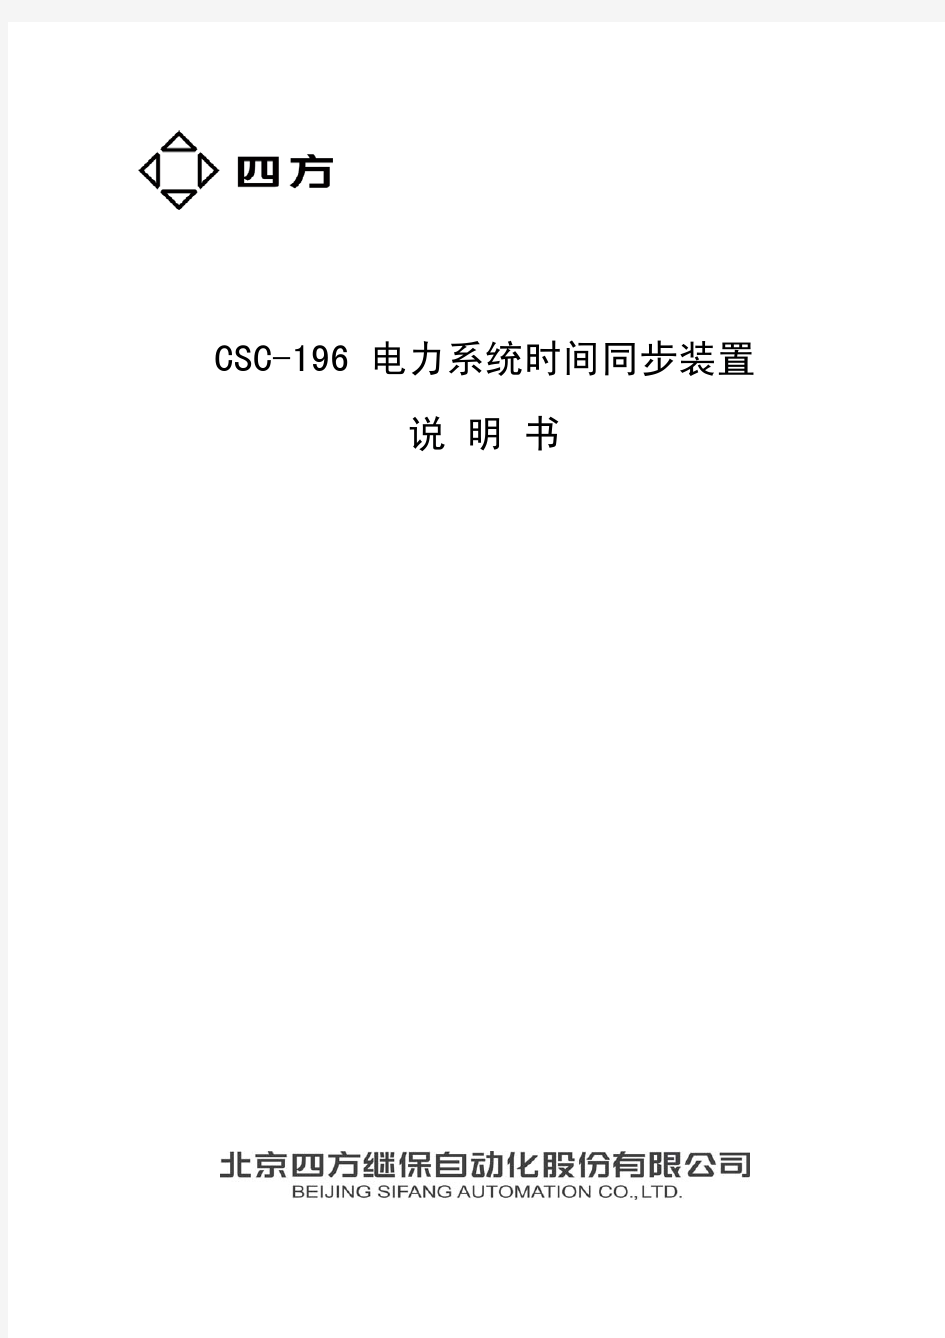 CSC-196电力系统时间同步装置说明书